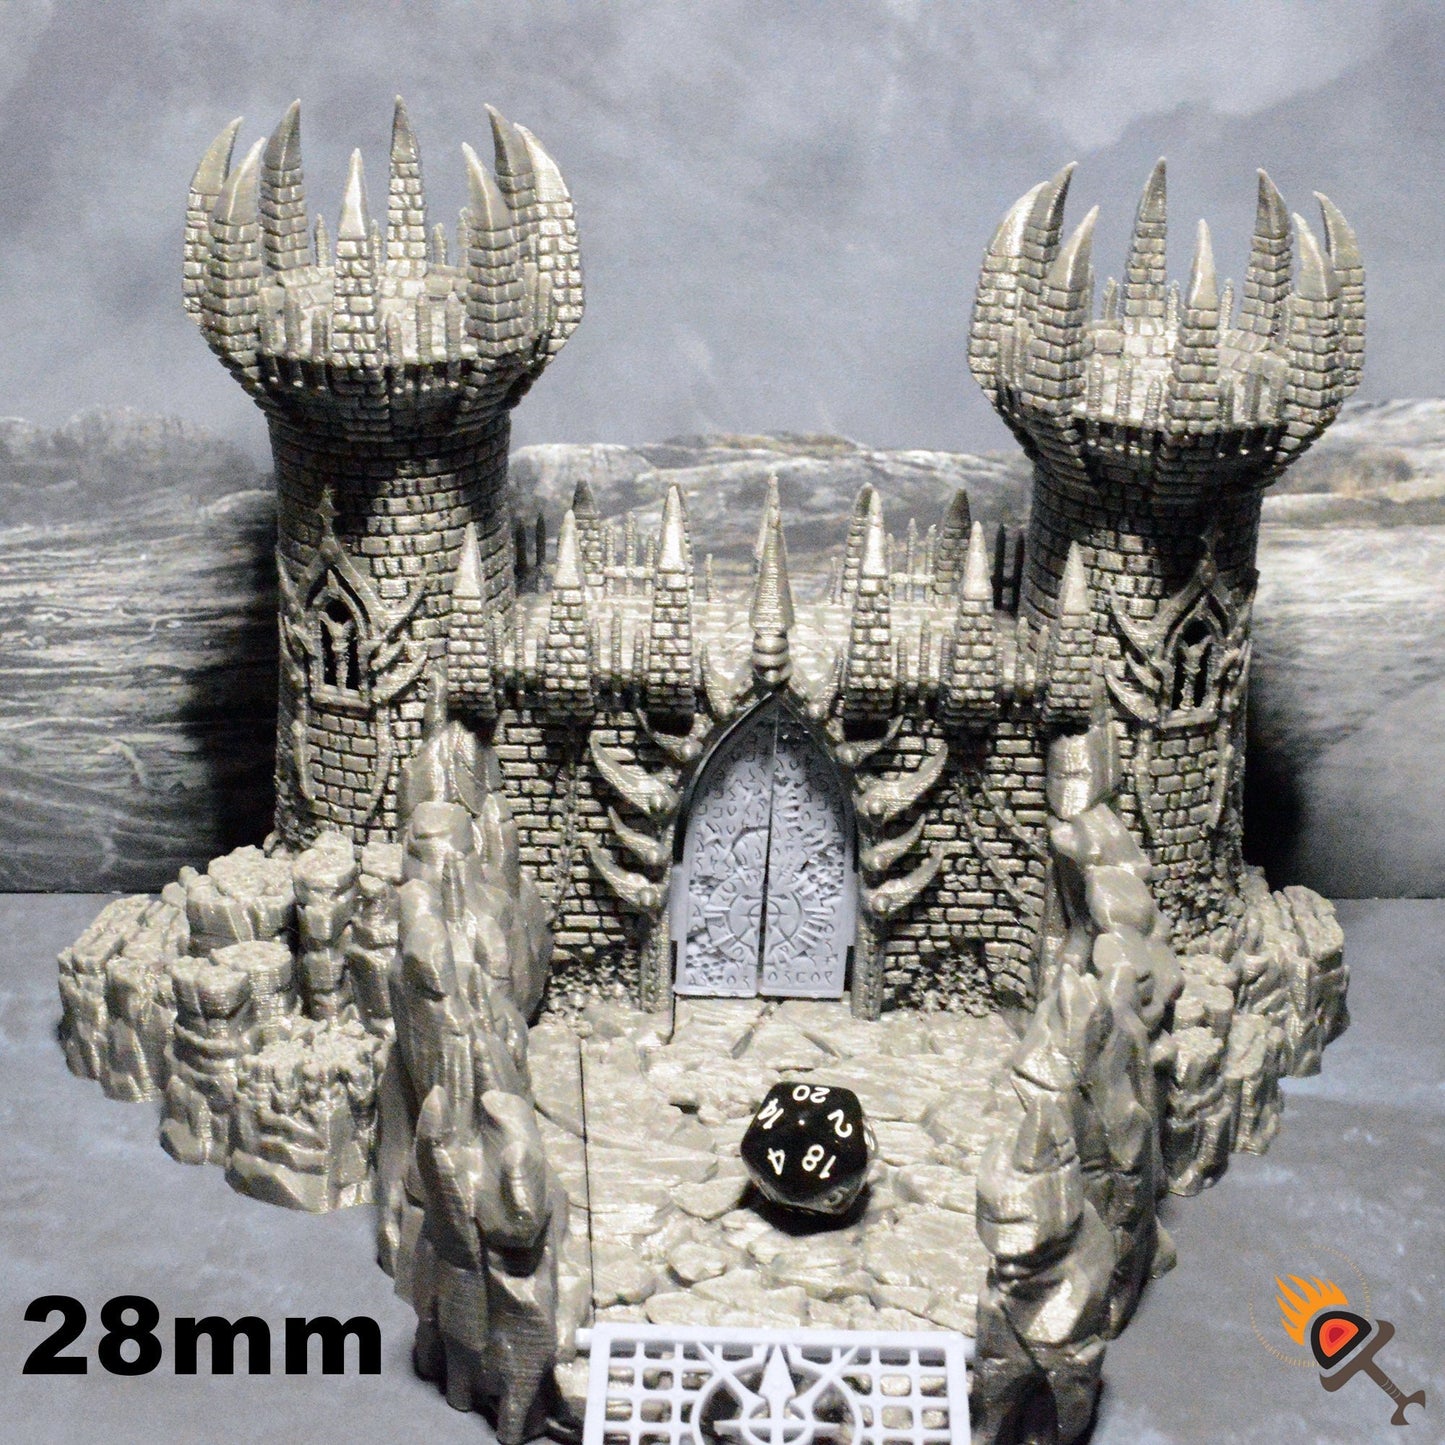 Hell Gate 15mm 28mm for D&D Terrain, DnD Pathfinder Warhammer 40k Demon Entrance